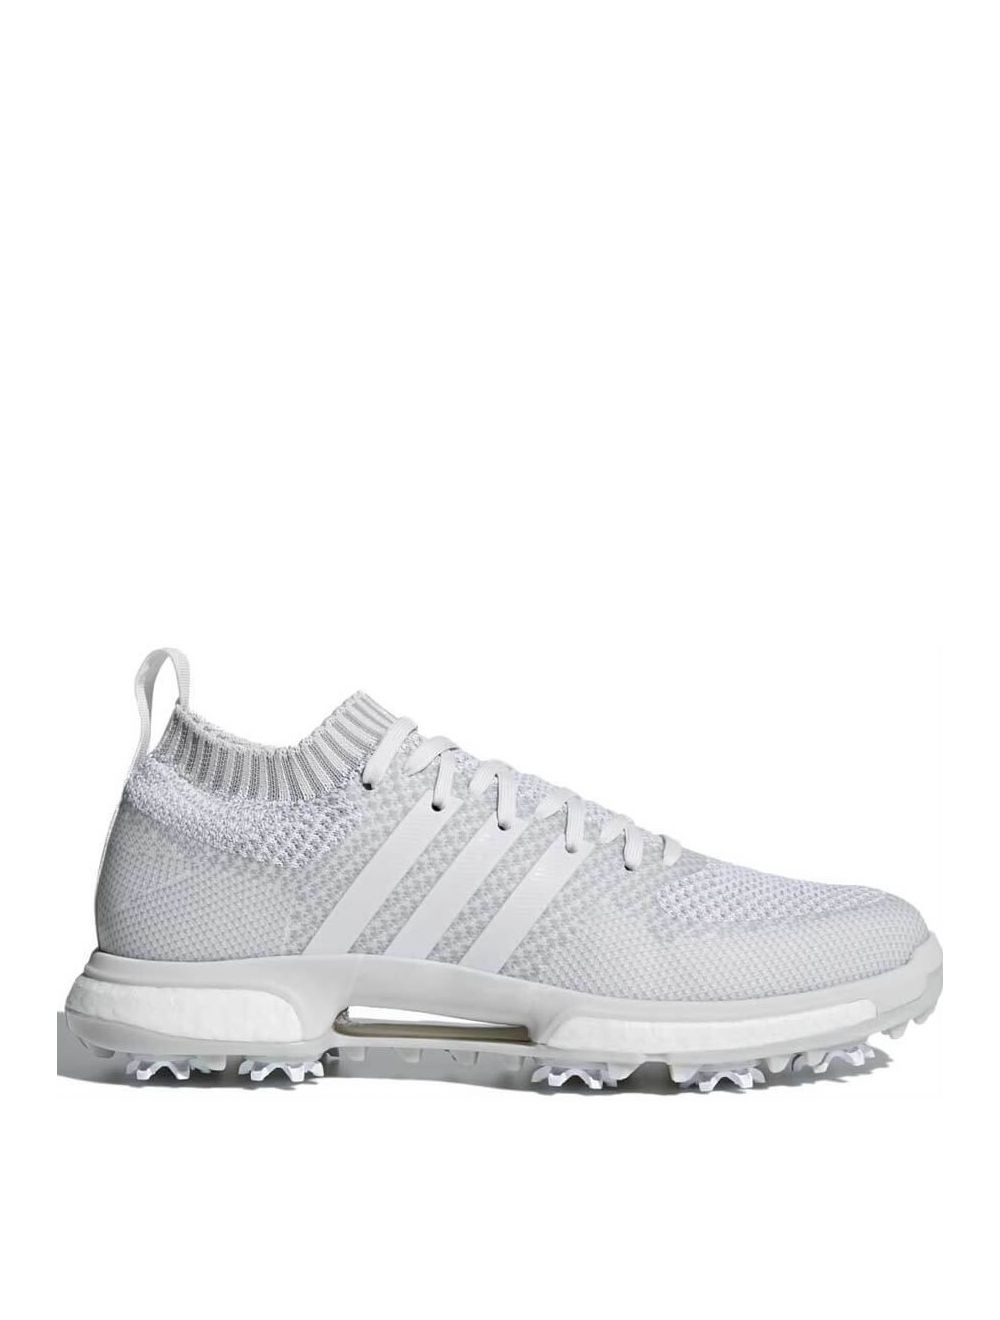 adidas Tour360 Knit Golf Shoes - White 